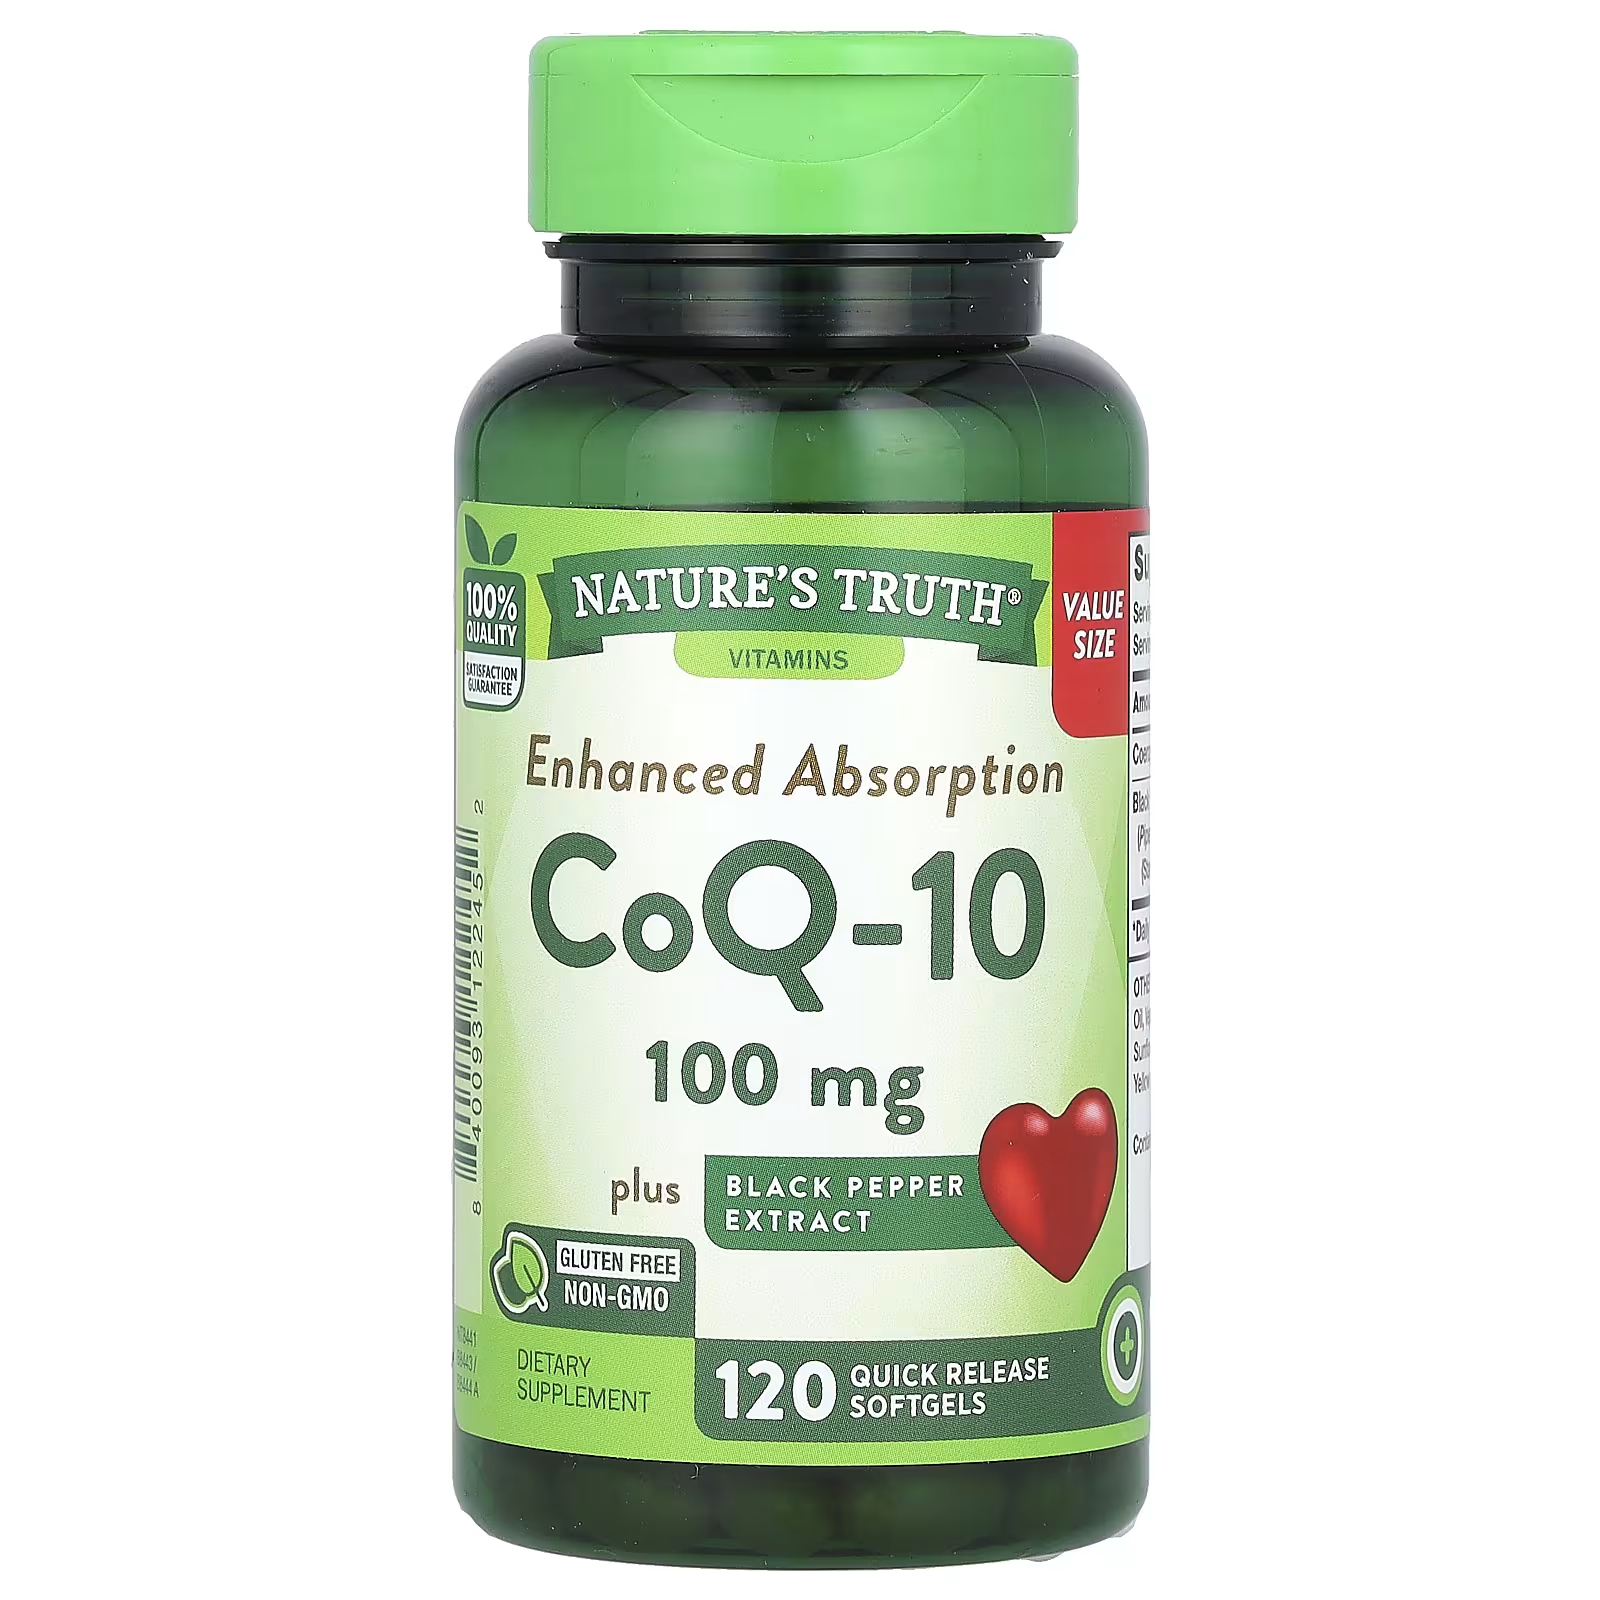 Пищевая добавка Nature's Truth CoQ-10 с улучшенной абсорбцией, 120 мягких таблеток